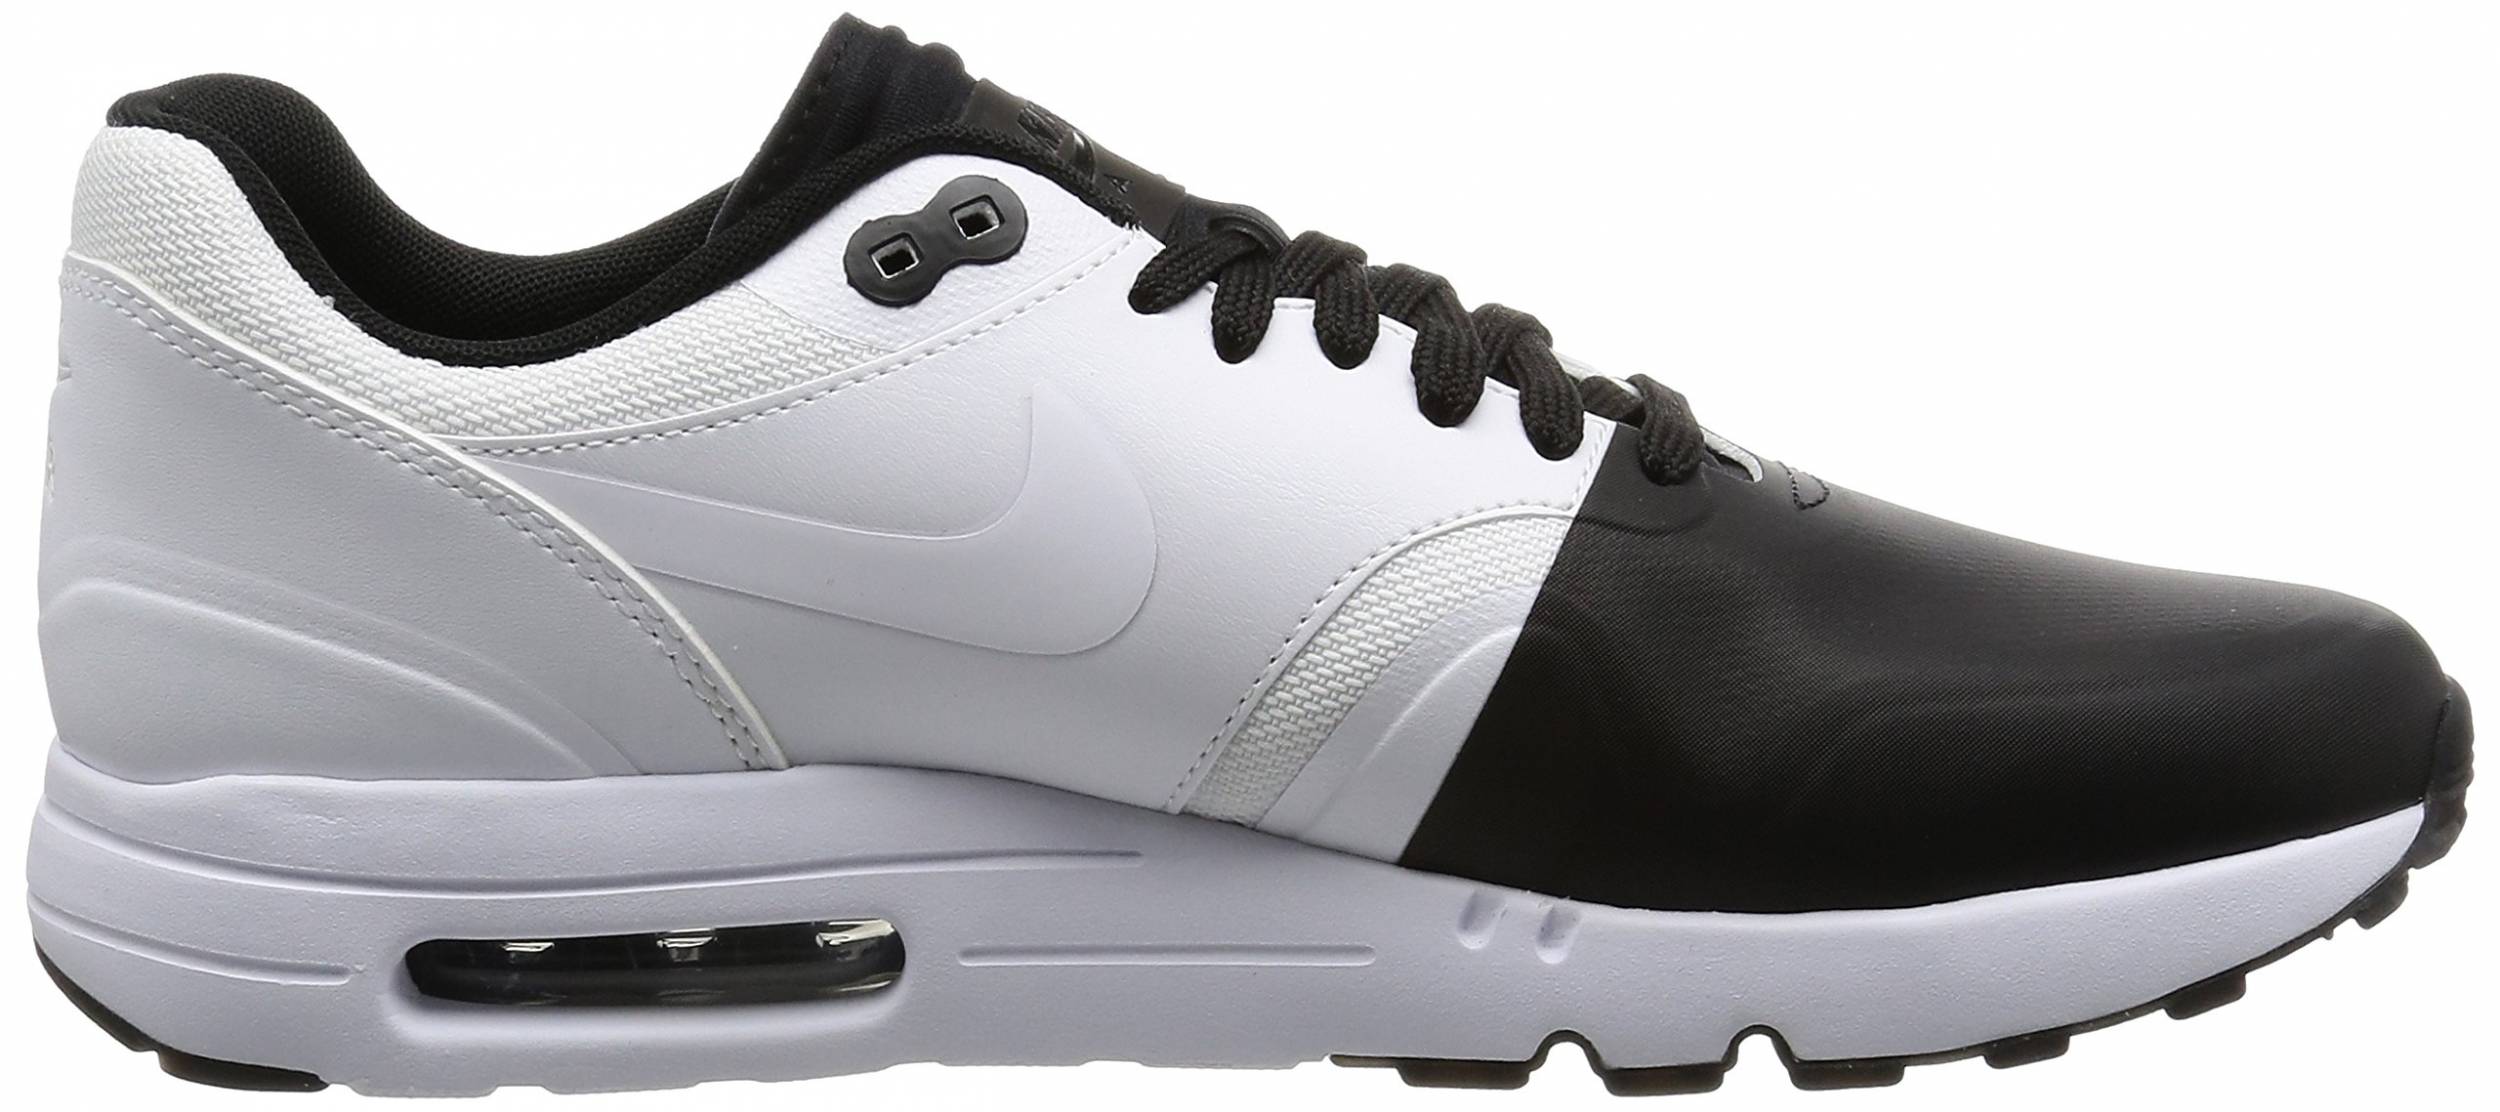 Nike Air Max 1 Ultra 2.0 SE sneakers in grey (only $92) | RunRepeat